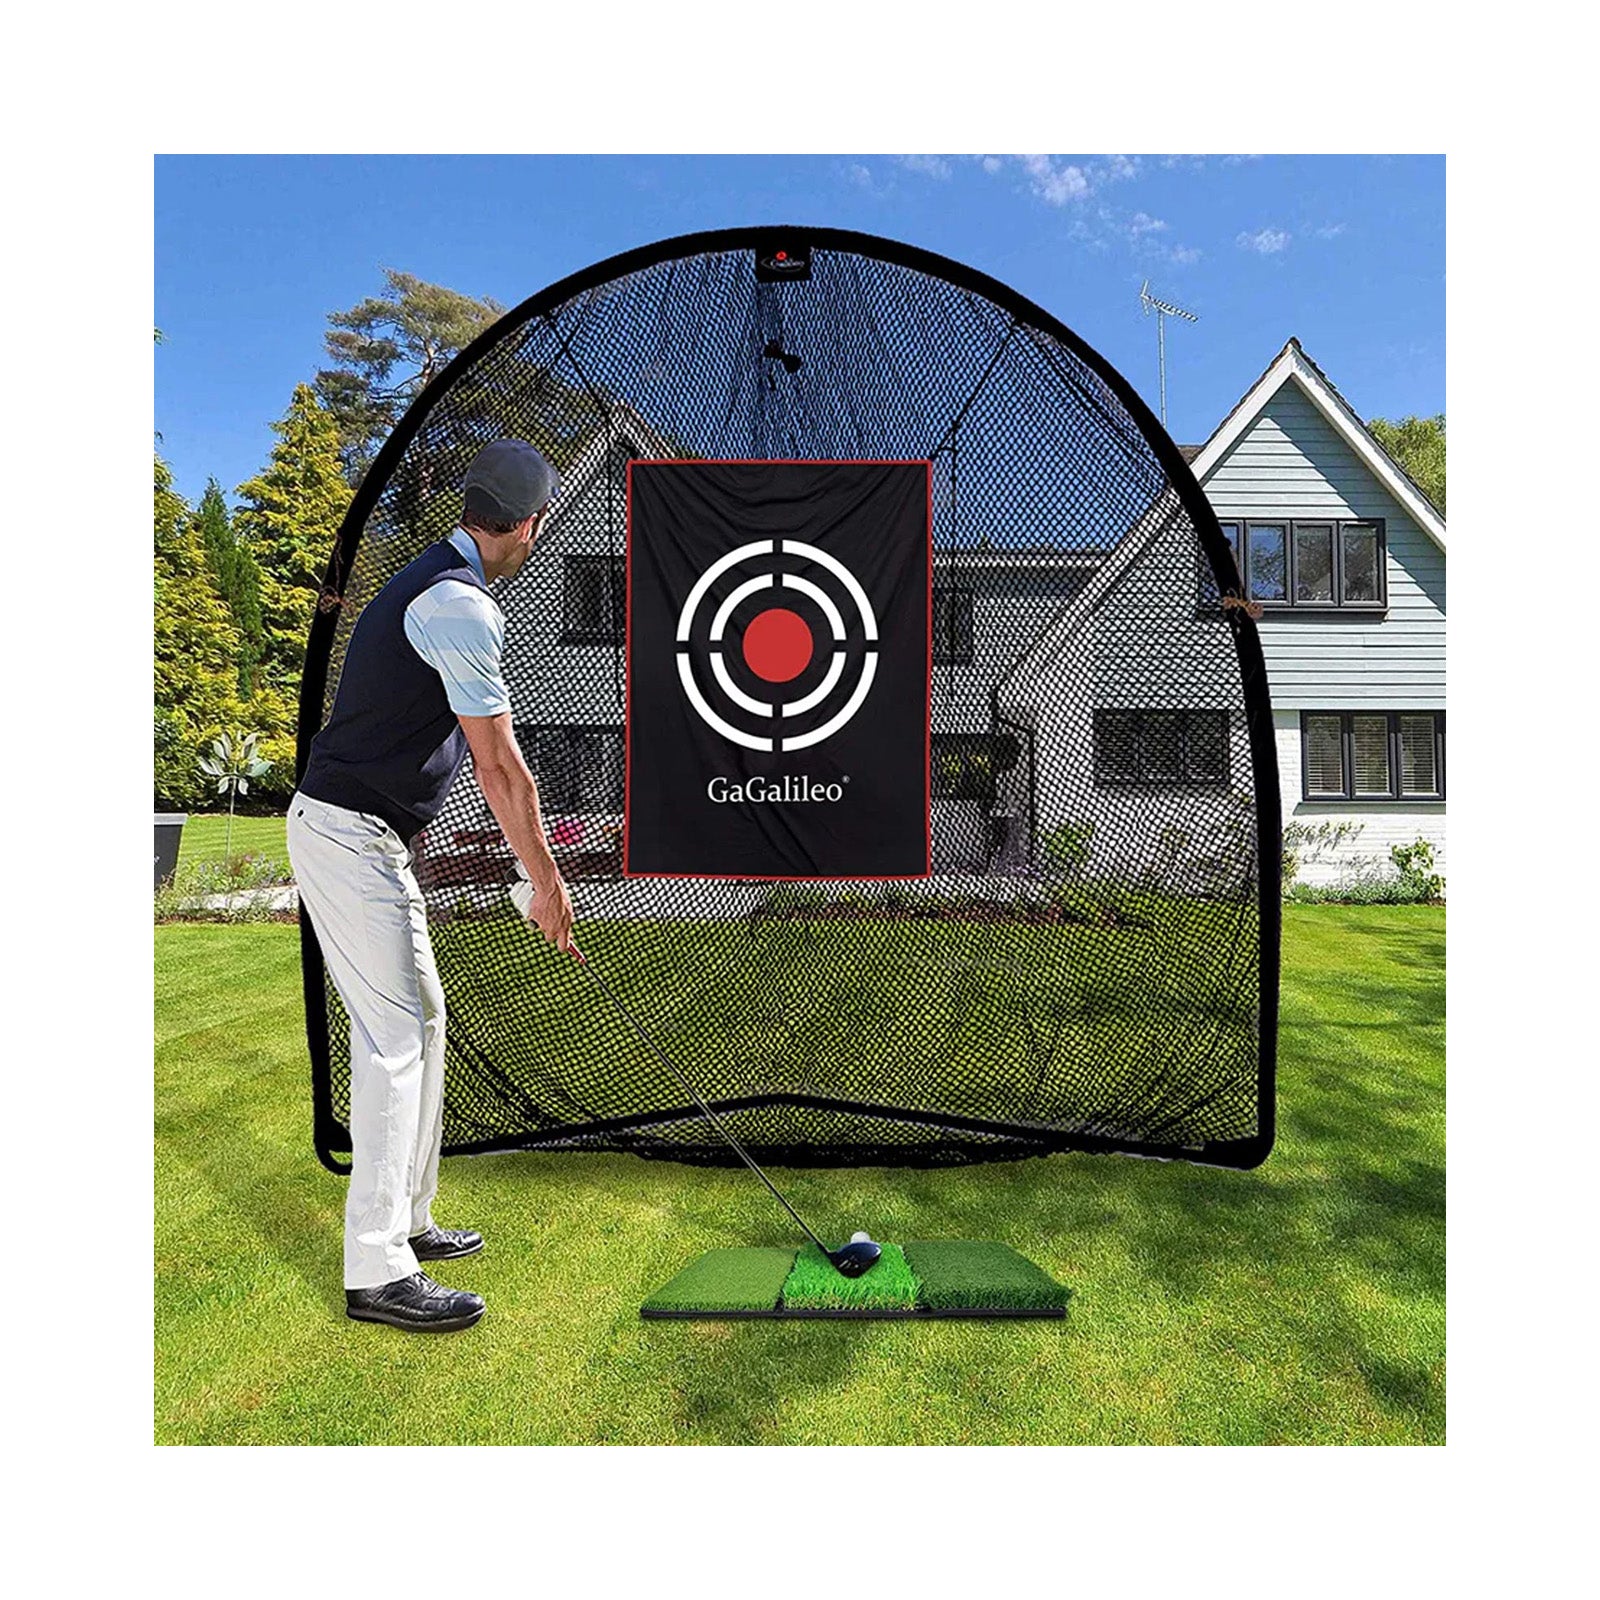 Red de práctica de golf para redes de golpe de golf en el patio trasero Red de práctica de golf | 8'X 8' X 3.5'| deportes galileo